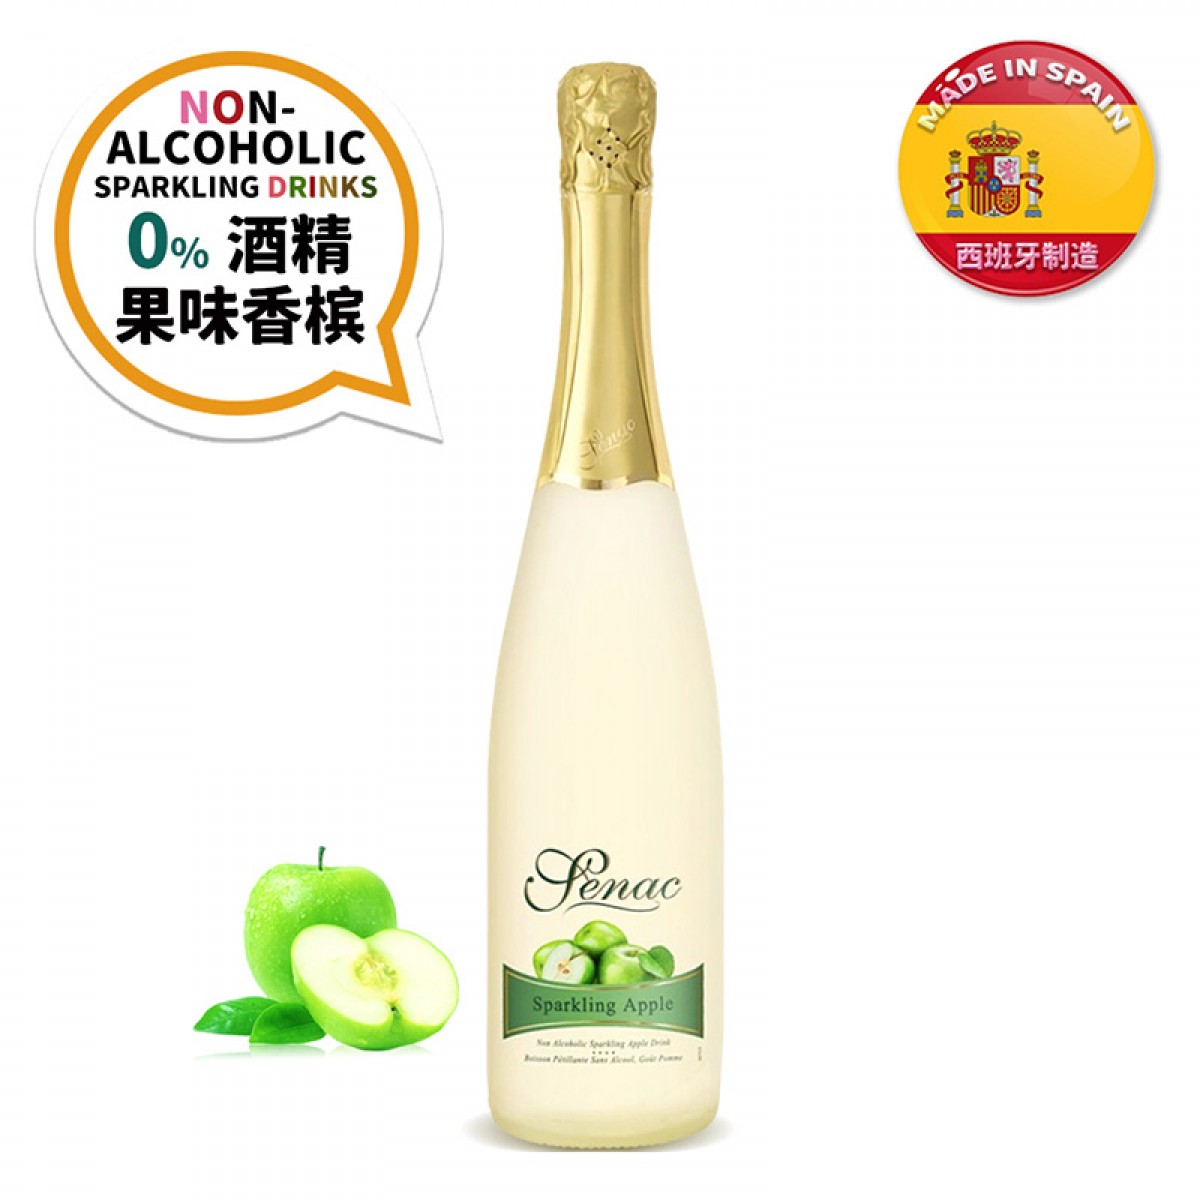 SENAC 施莱尔0%无酒精果味香槟 - 青苹果味/Non-Alcoholic Sparkling Drink - Apple